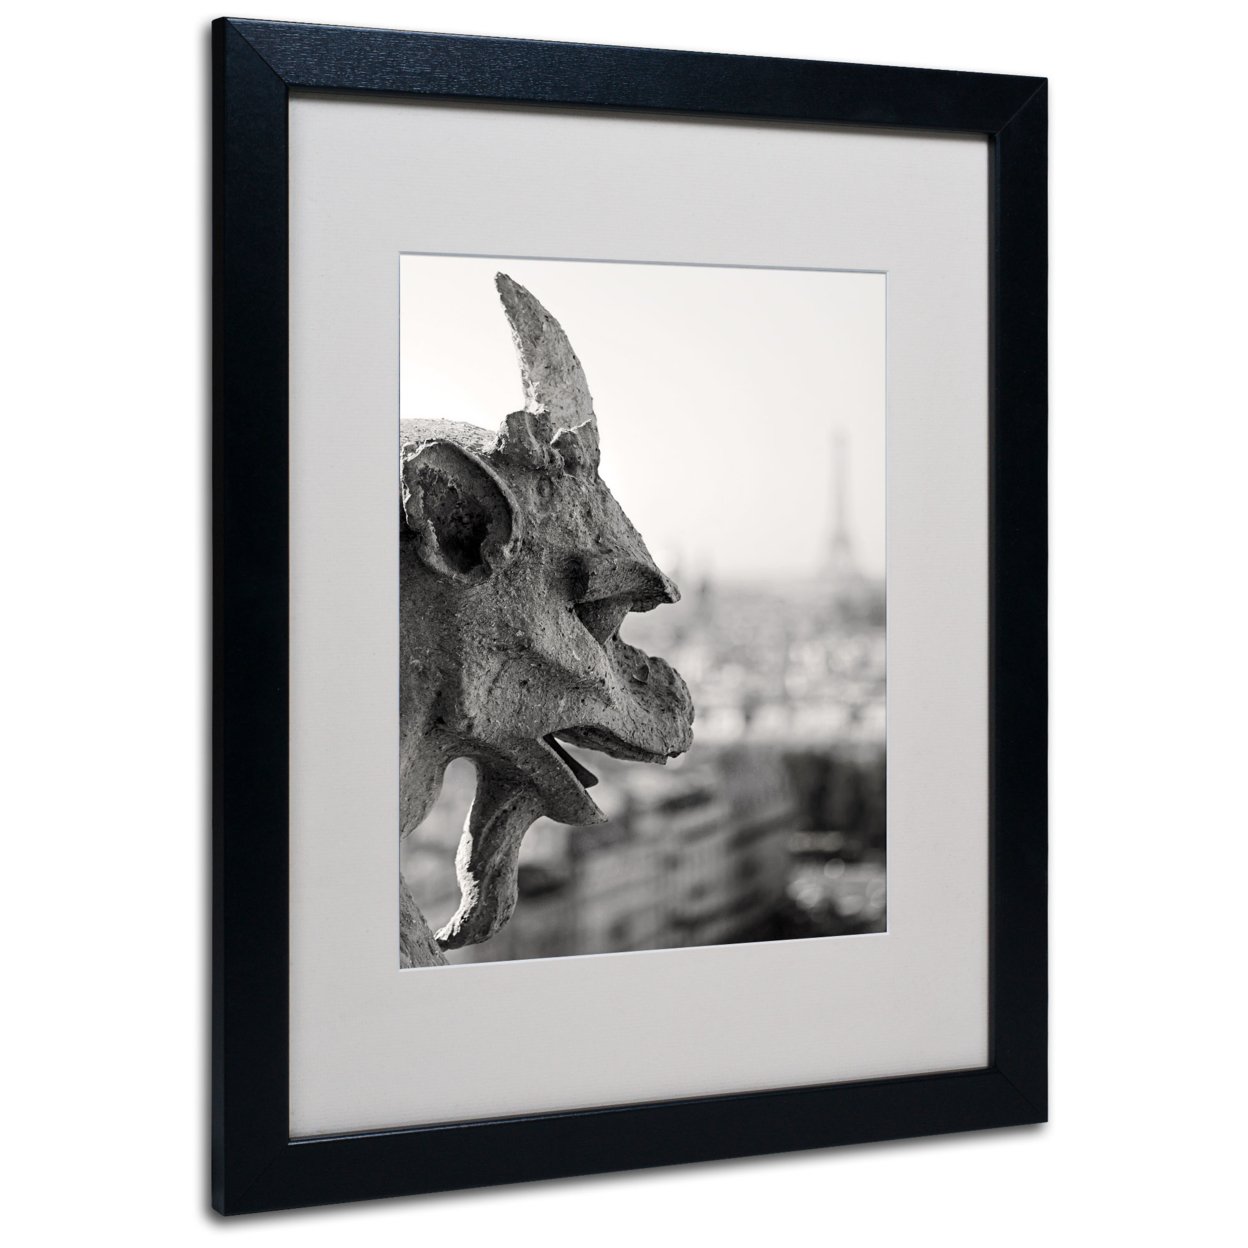 Pierre Leclerc 'Gargoyle Paris' Black Wooden Framed Art 18 X 22 Inches